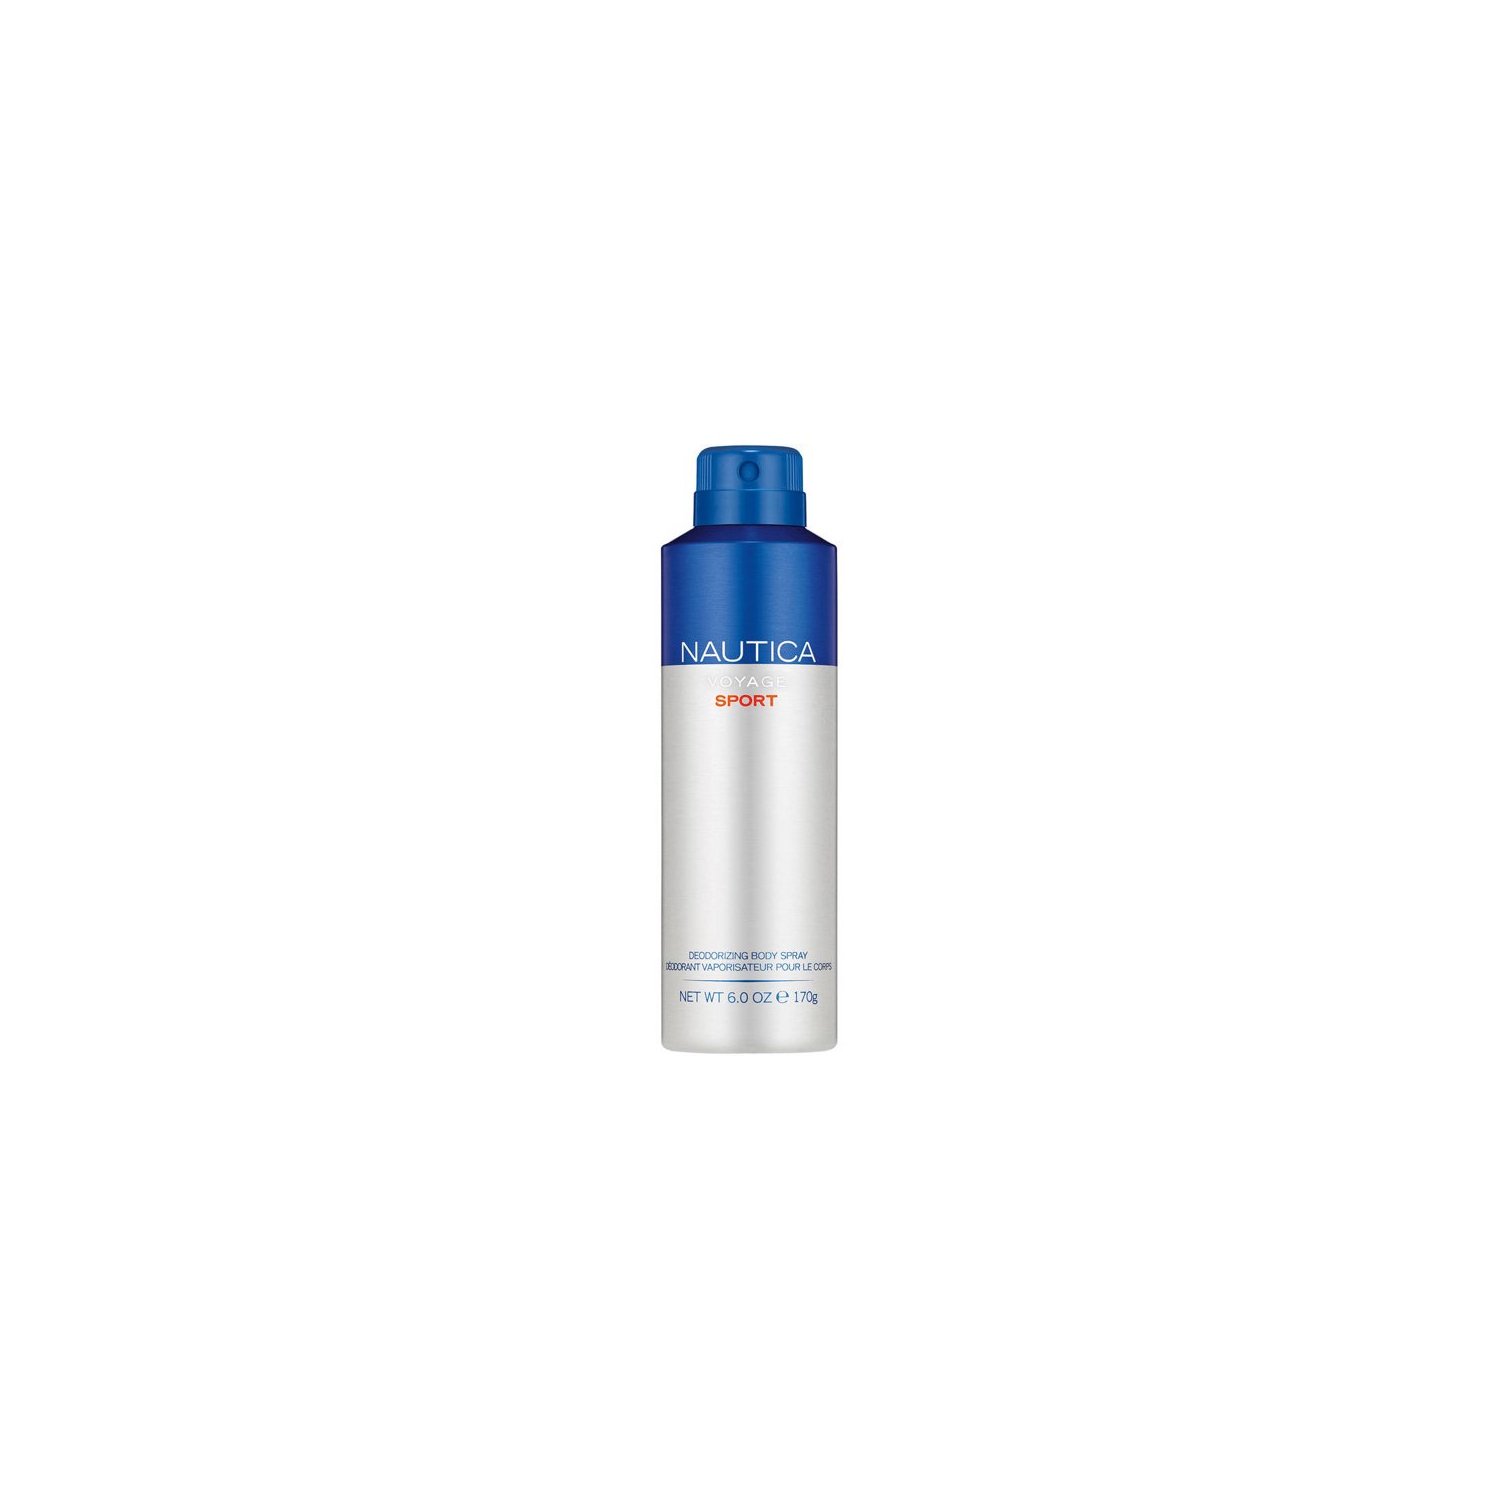 Nautica Voyage Sport Deodorant Body Spray